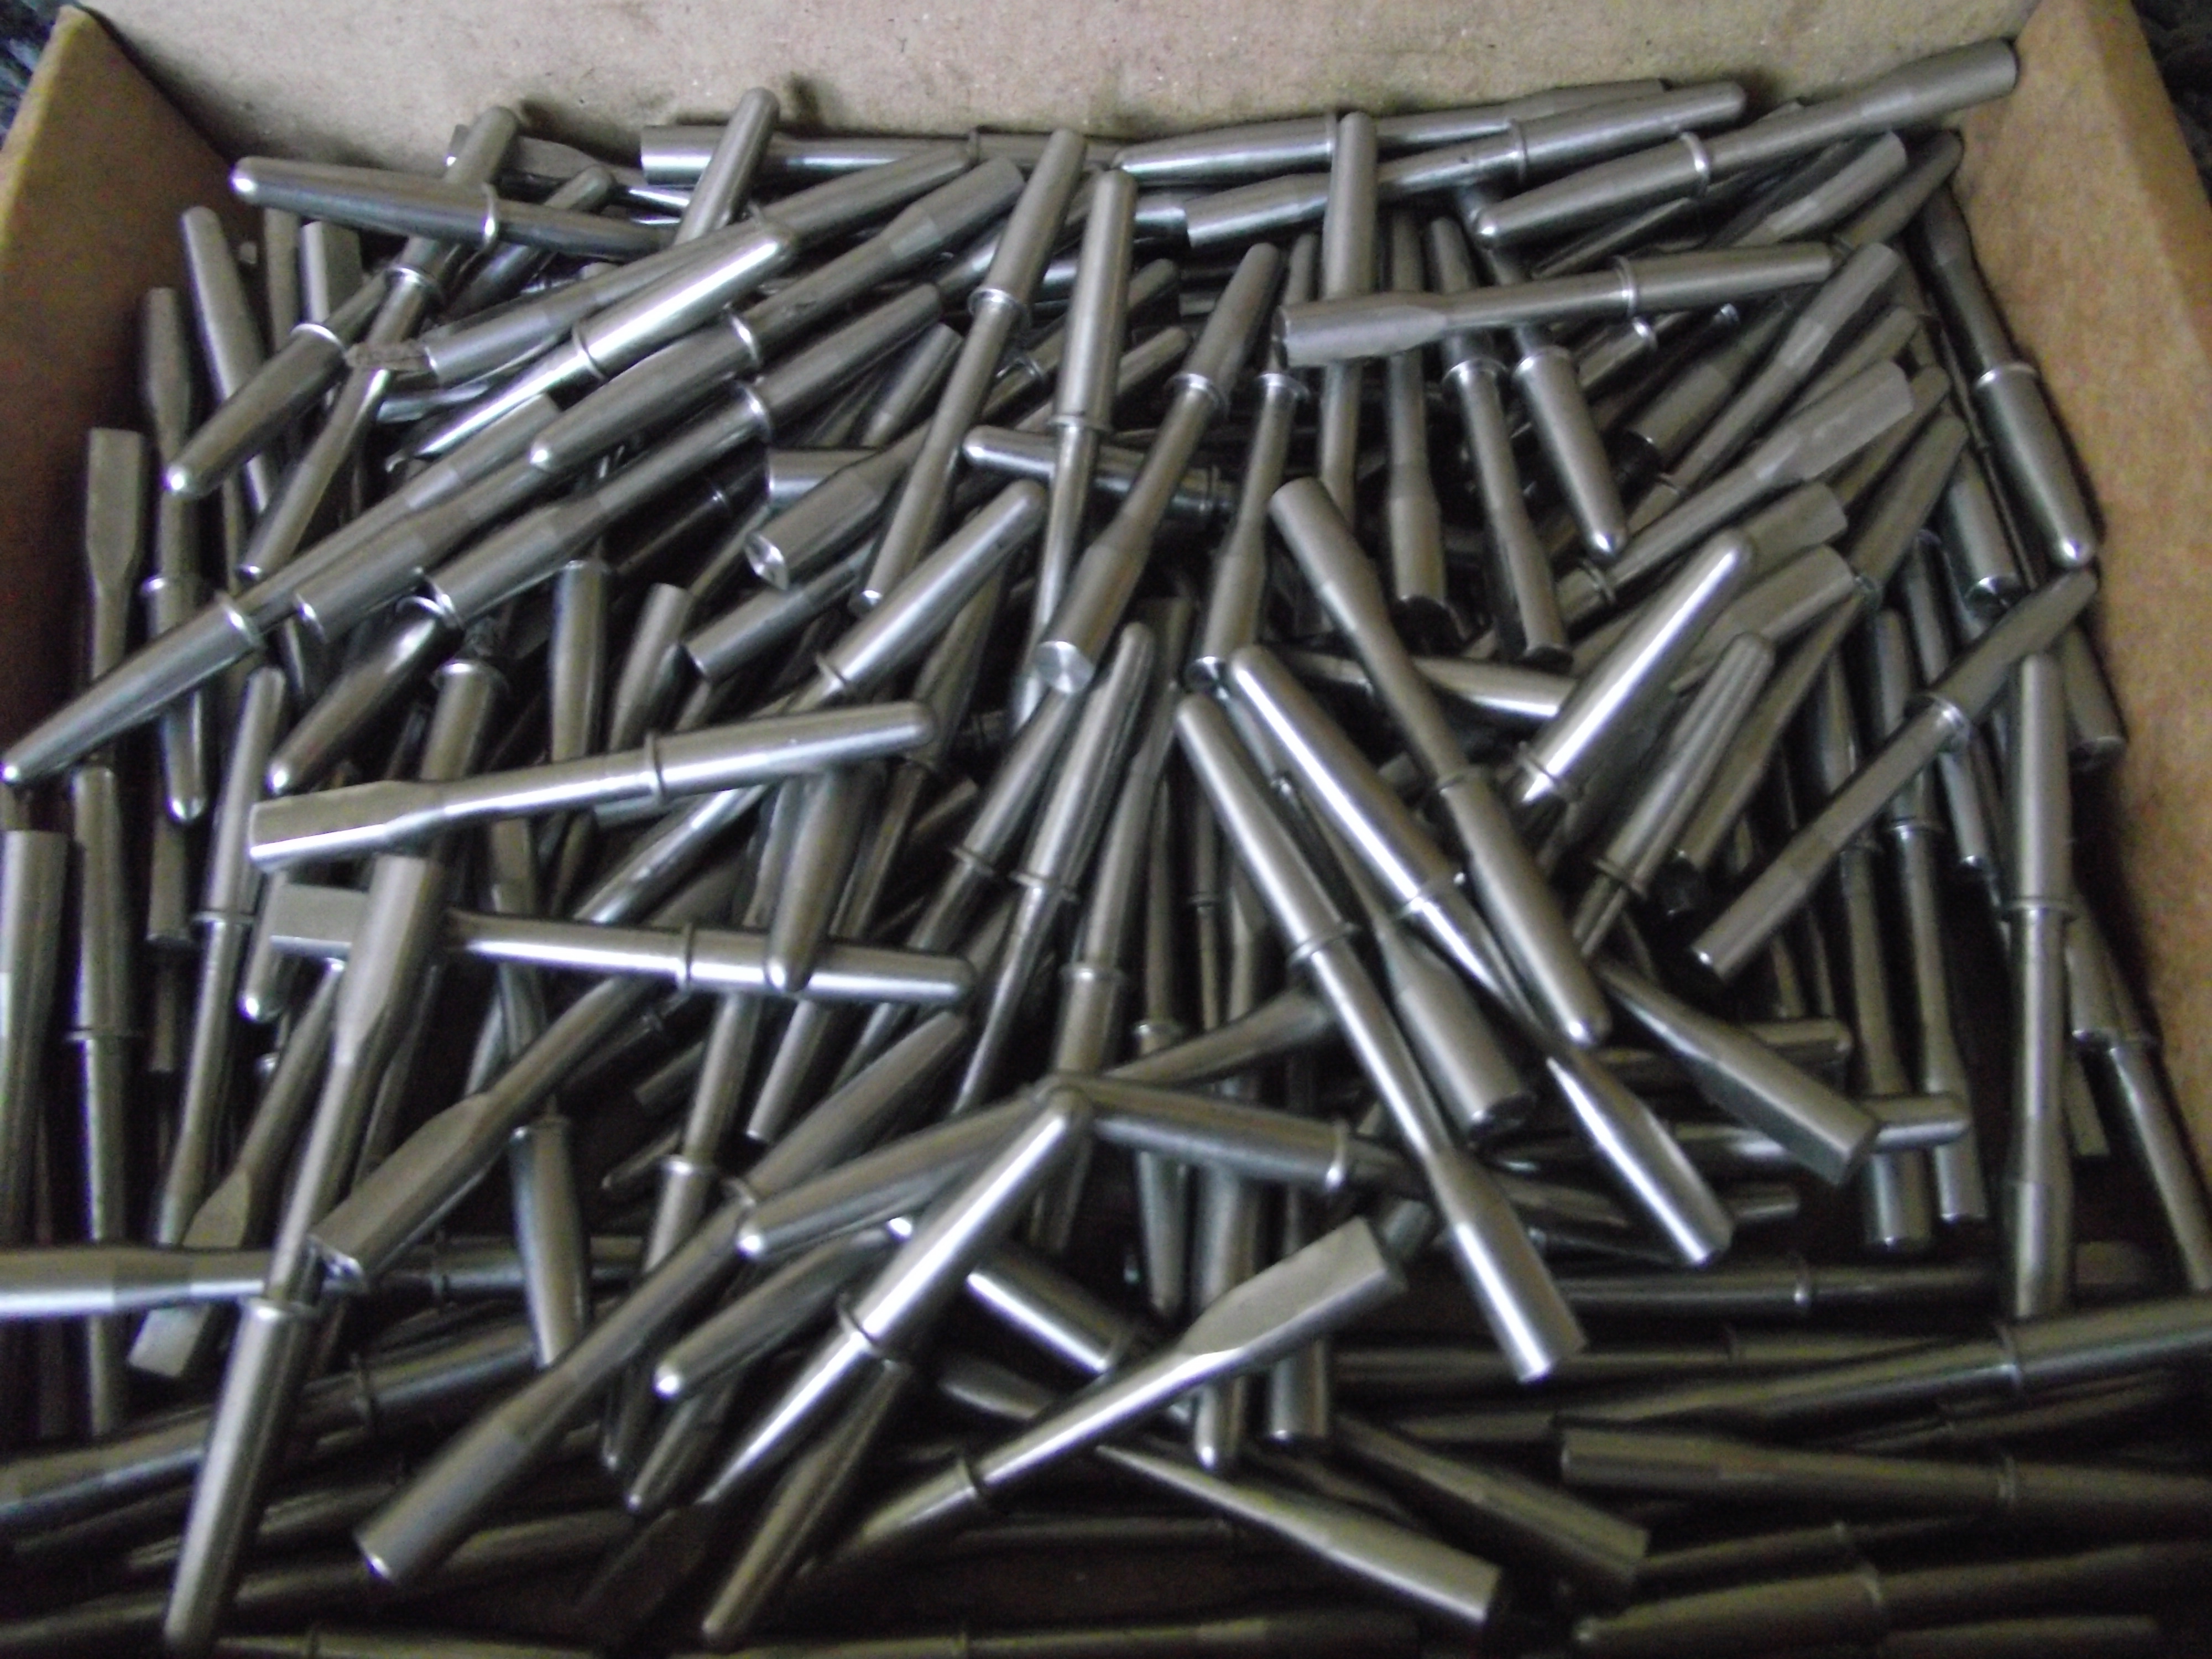  Benchrest UK / WRABF legal Stainless steel Scoring Plugs